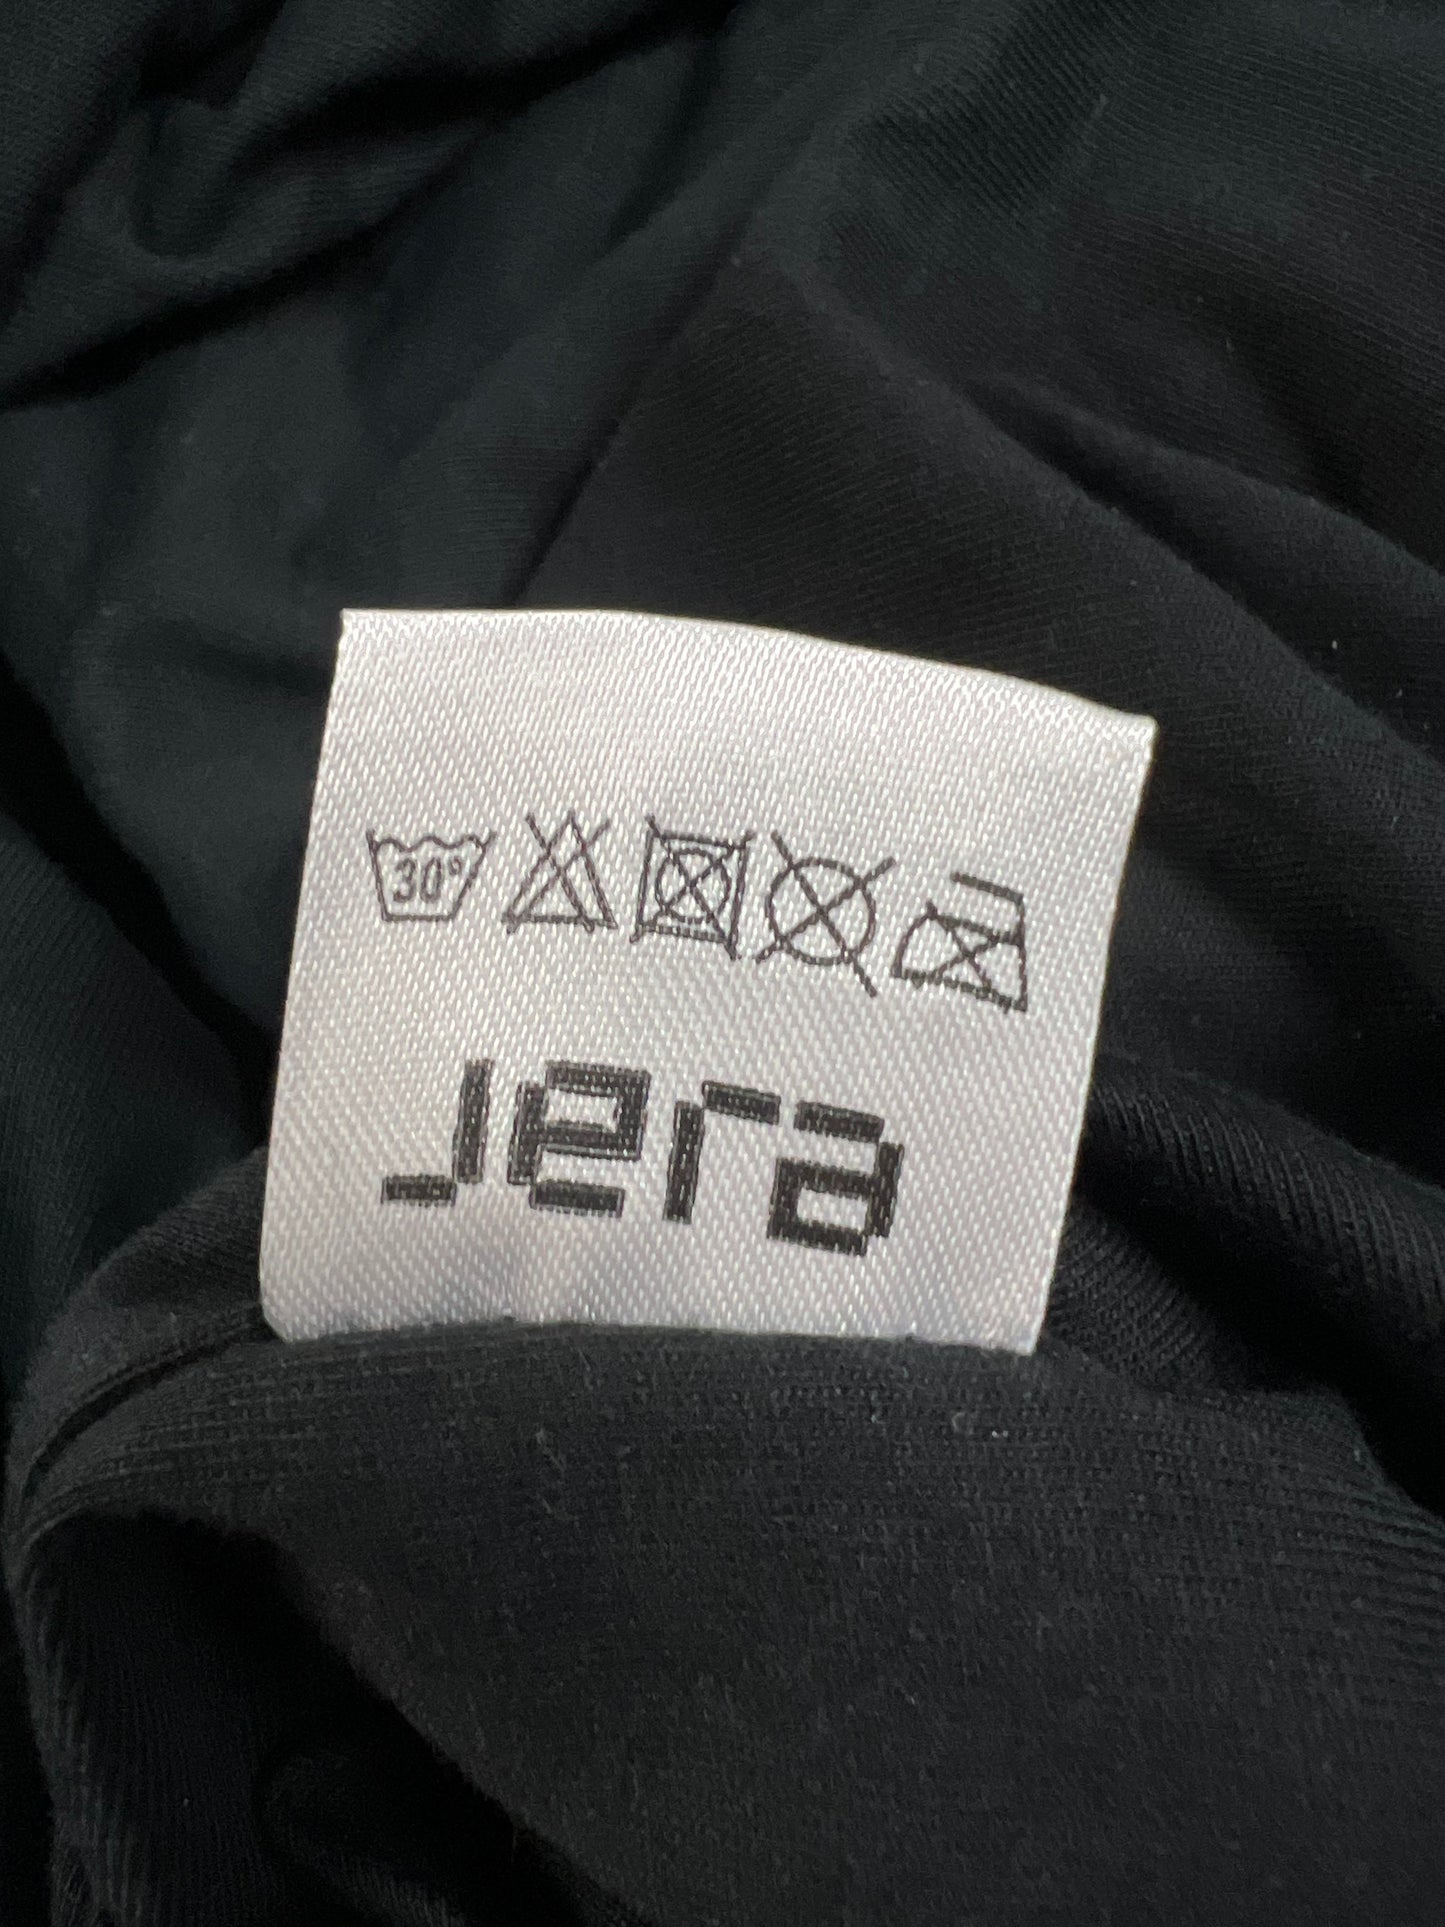 Jera Distressed laser cut Black longsleeve SZ:S|XL